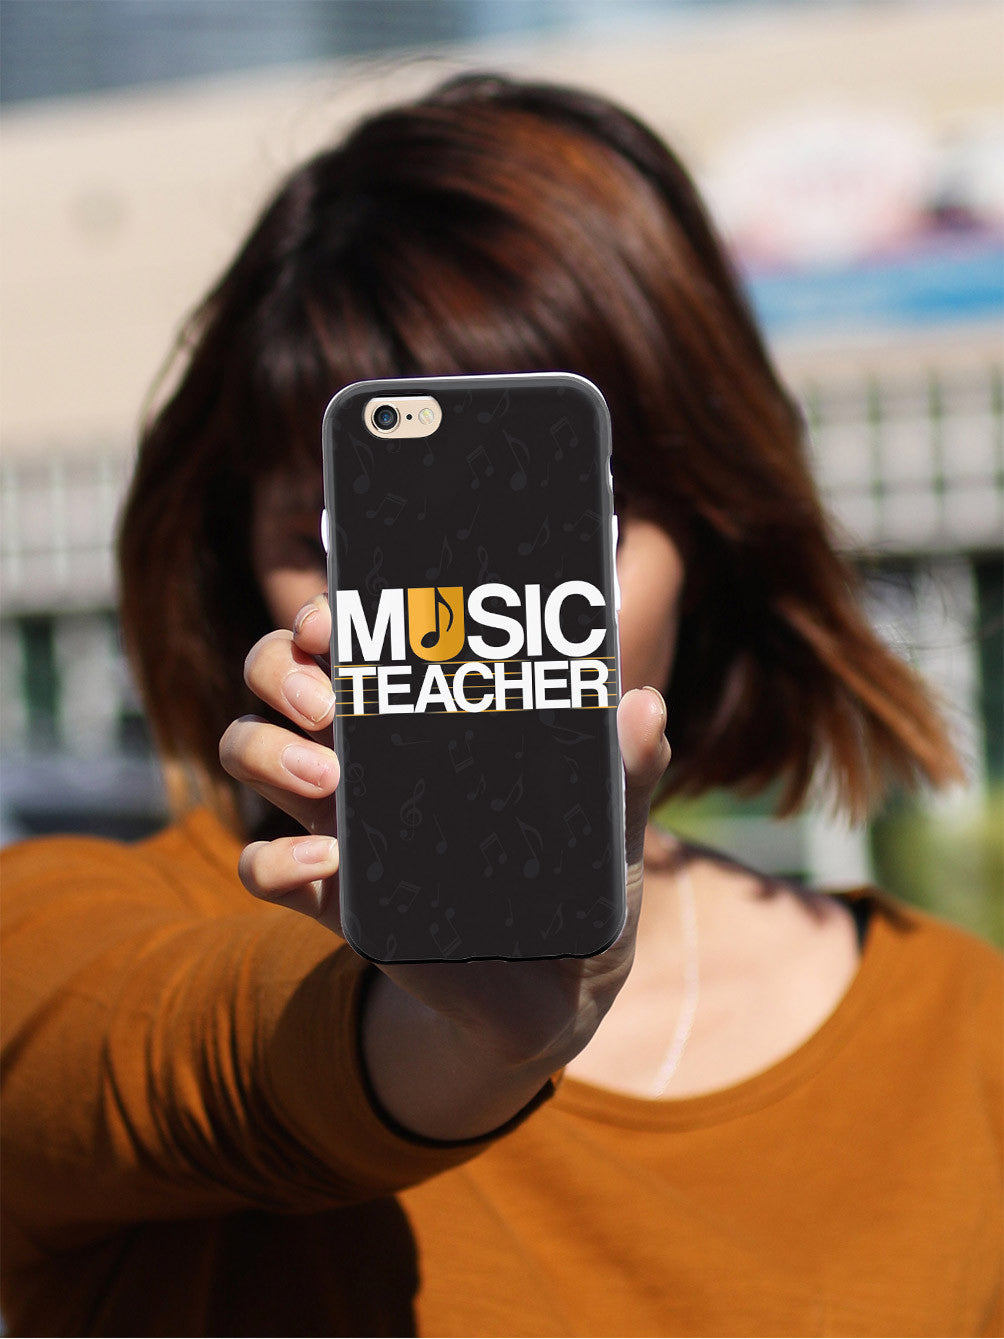 Music Teacher Case